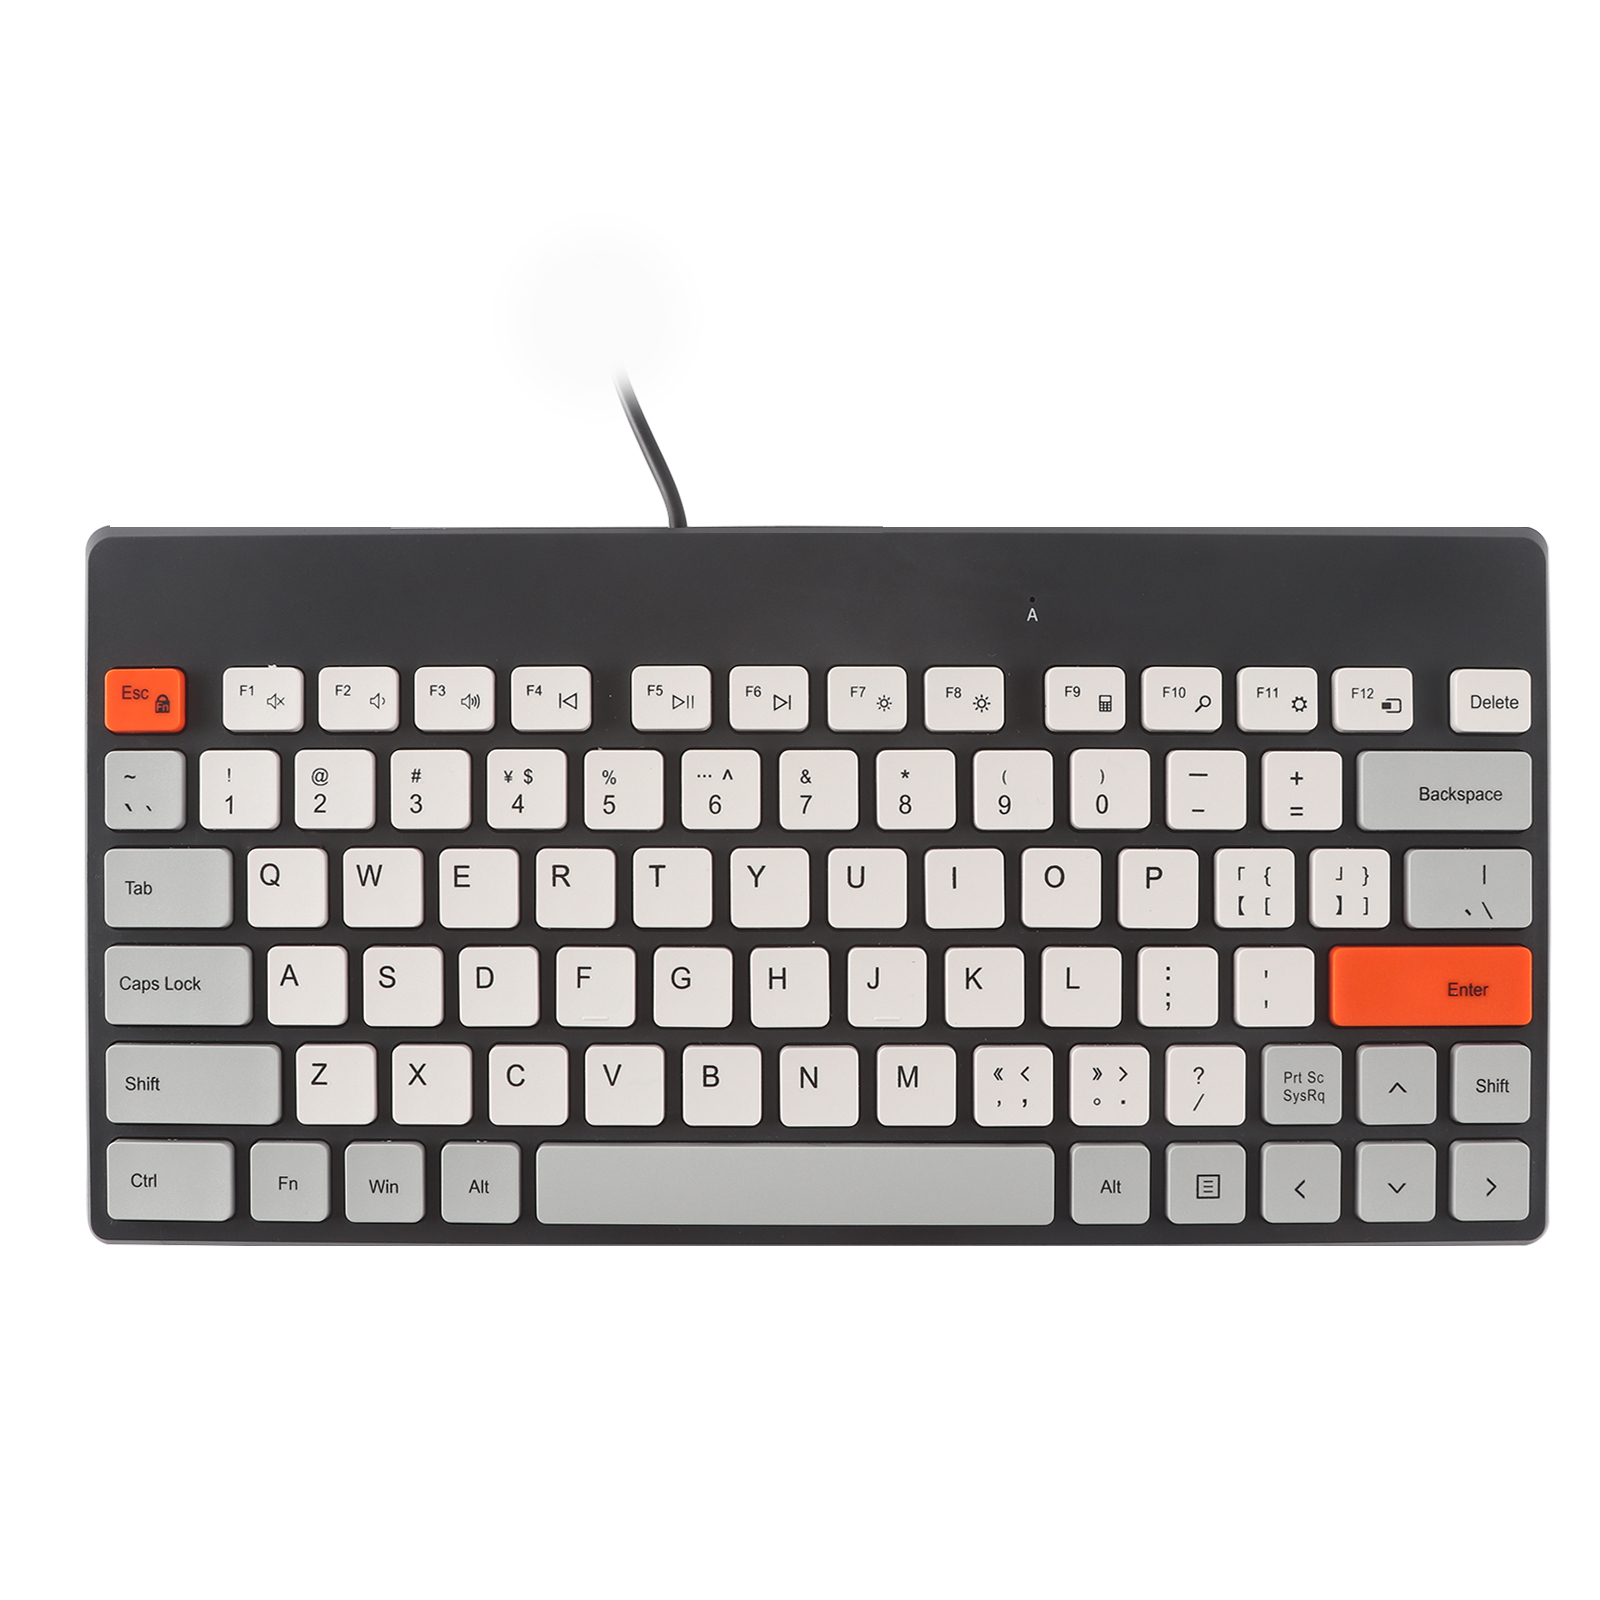 I-Slim-Silent-Wired-Keyboard-Usb-Cable-Ergonomic-Thin-Keypad-Cute-Mini-Keyboards-For-Mac-Laptop-PC (5)